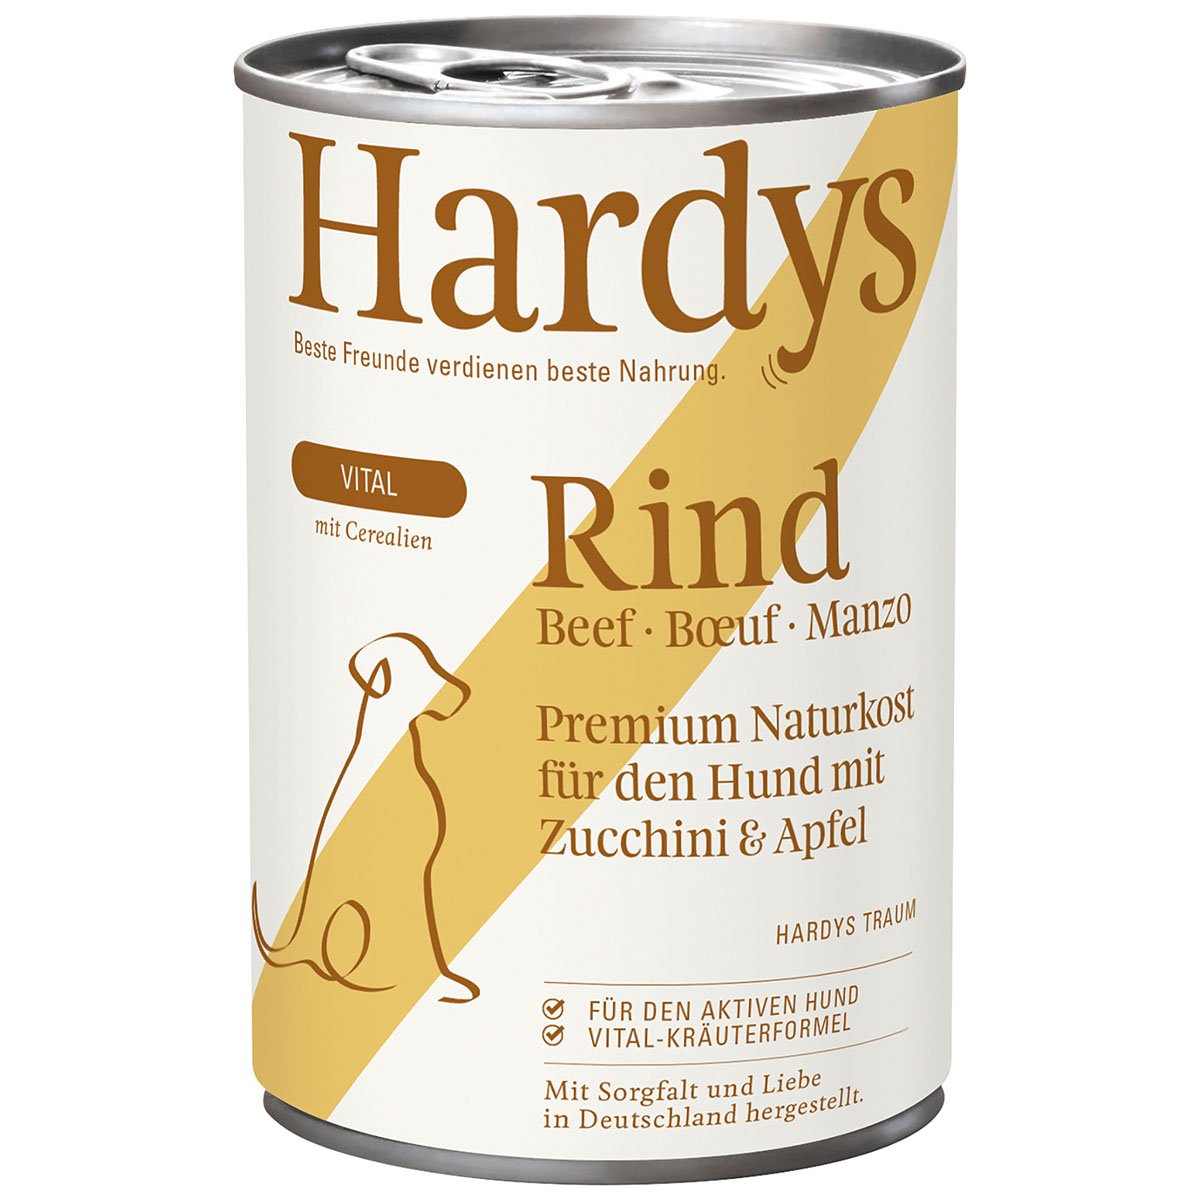 Hardys VITAL Rind mit Zucchini & Apfel 12x400g von Hardys